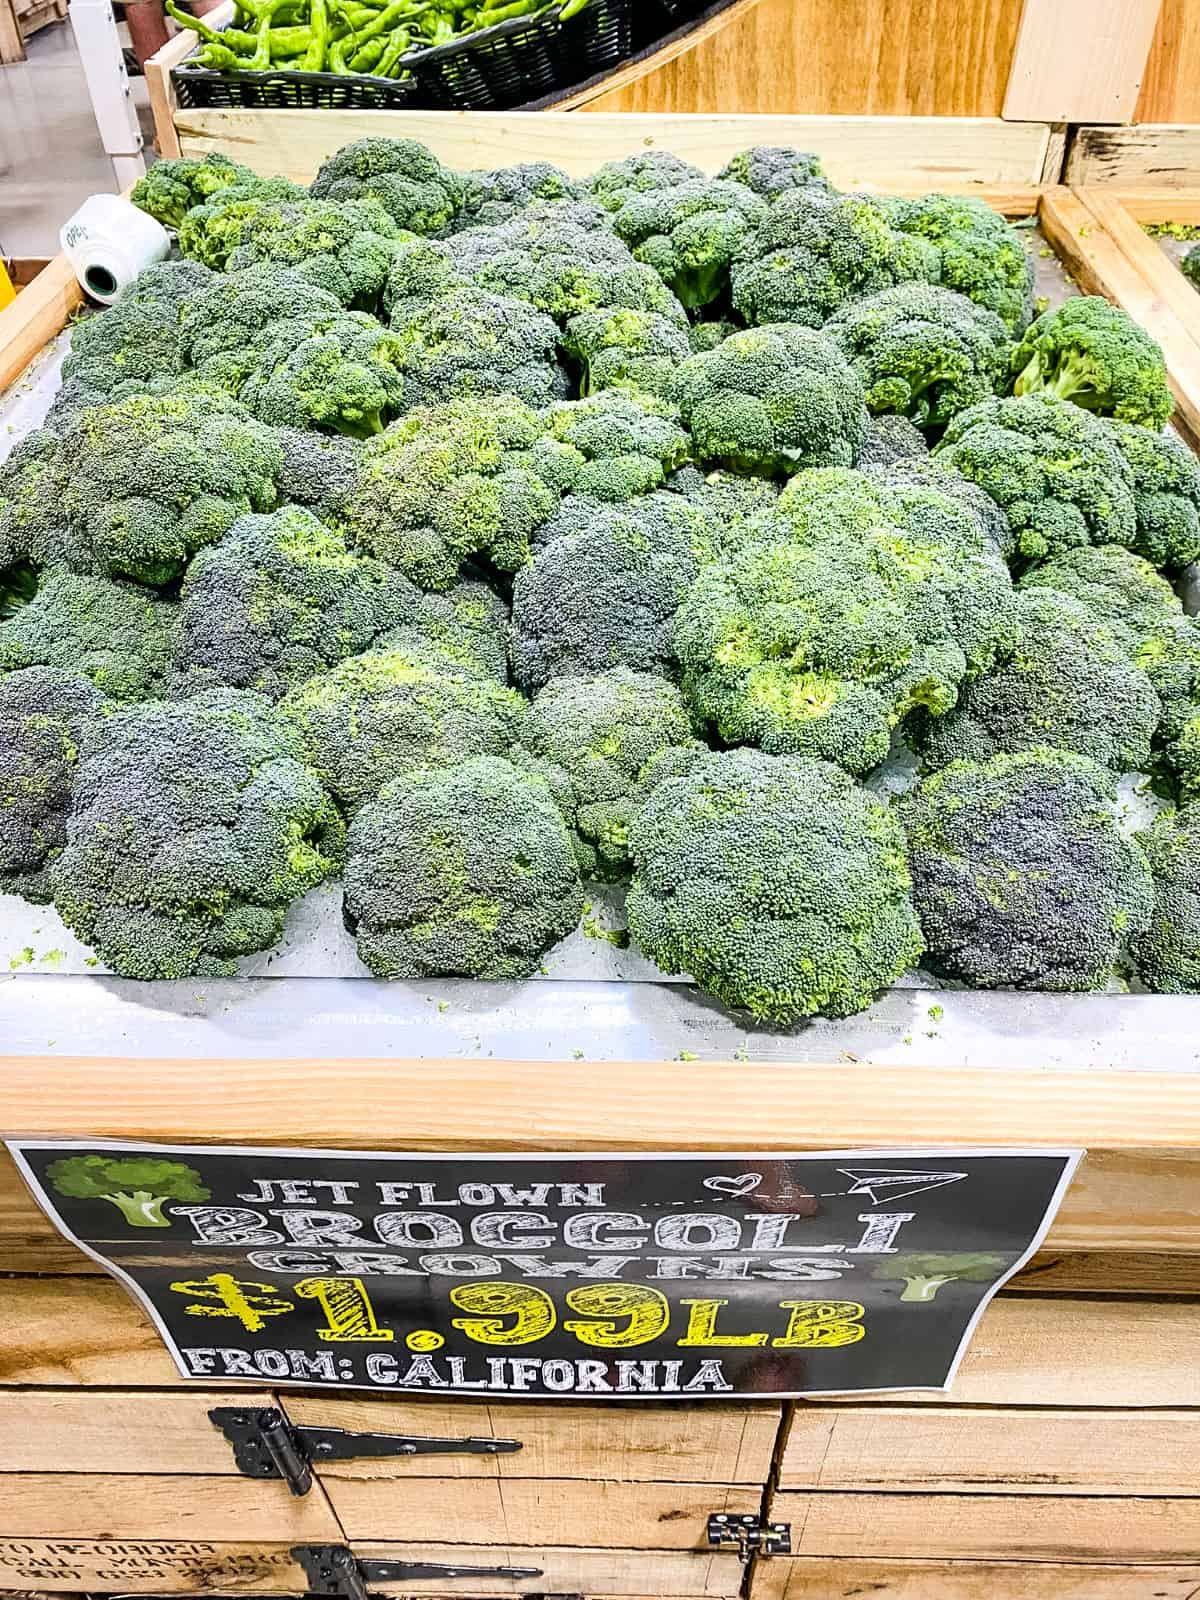 Broccoli in supermarket.